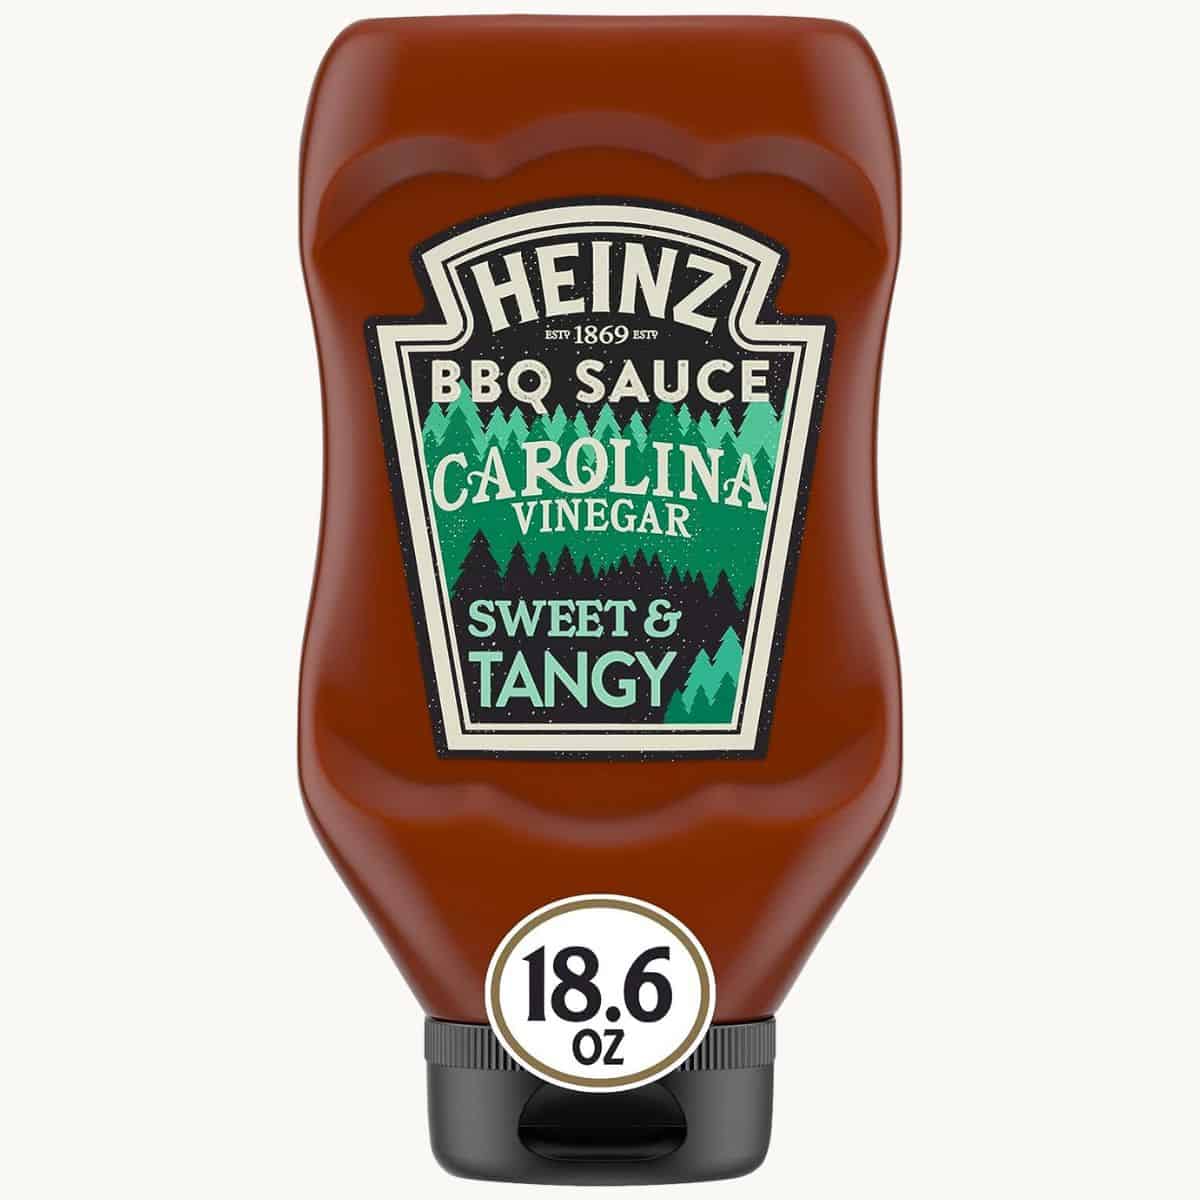 Heinz BBQ Sauce.